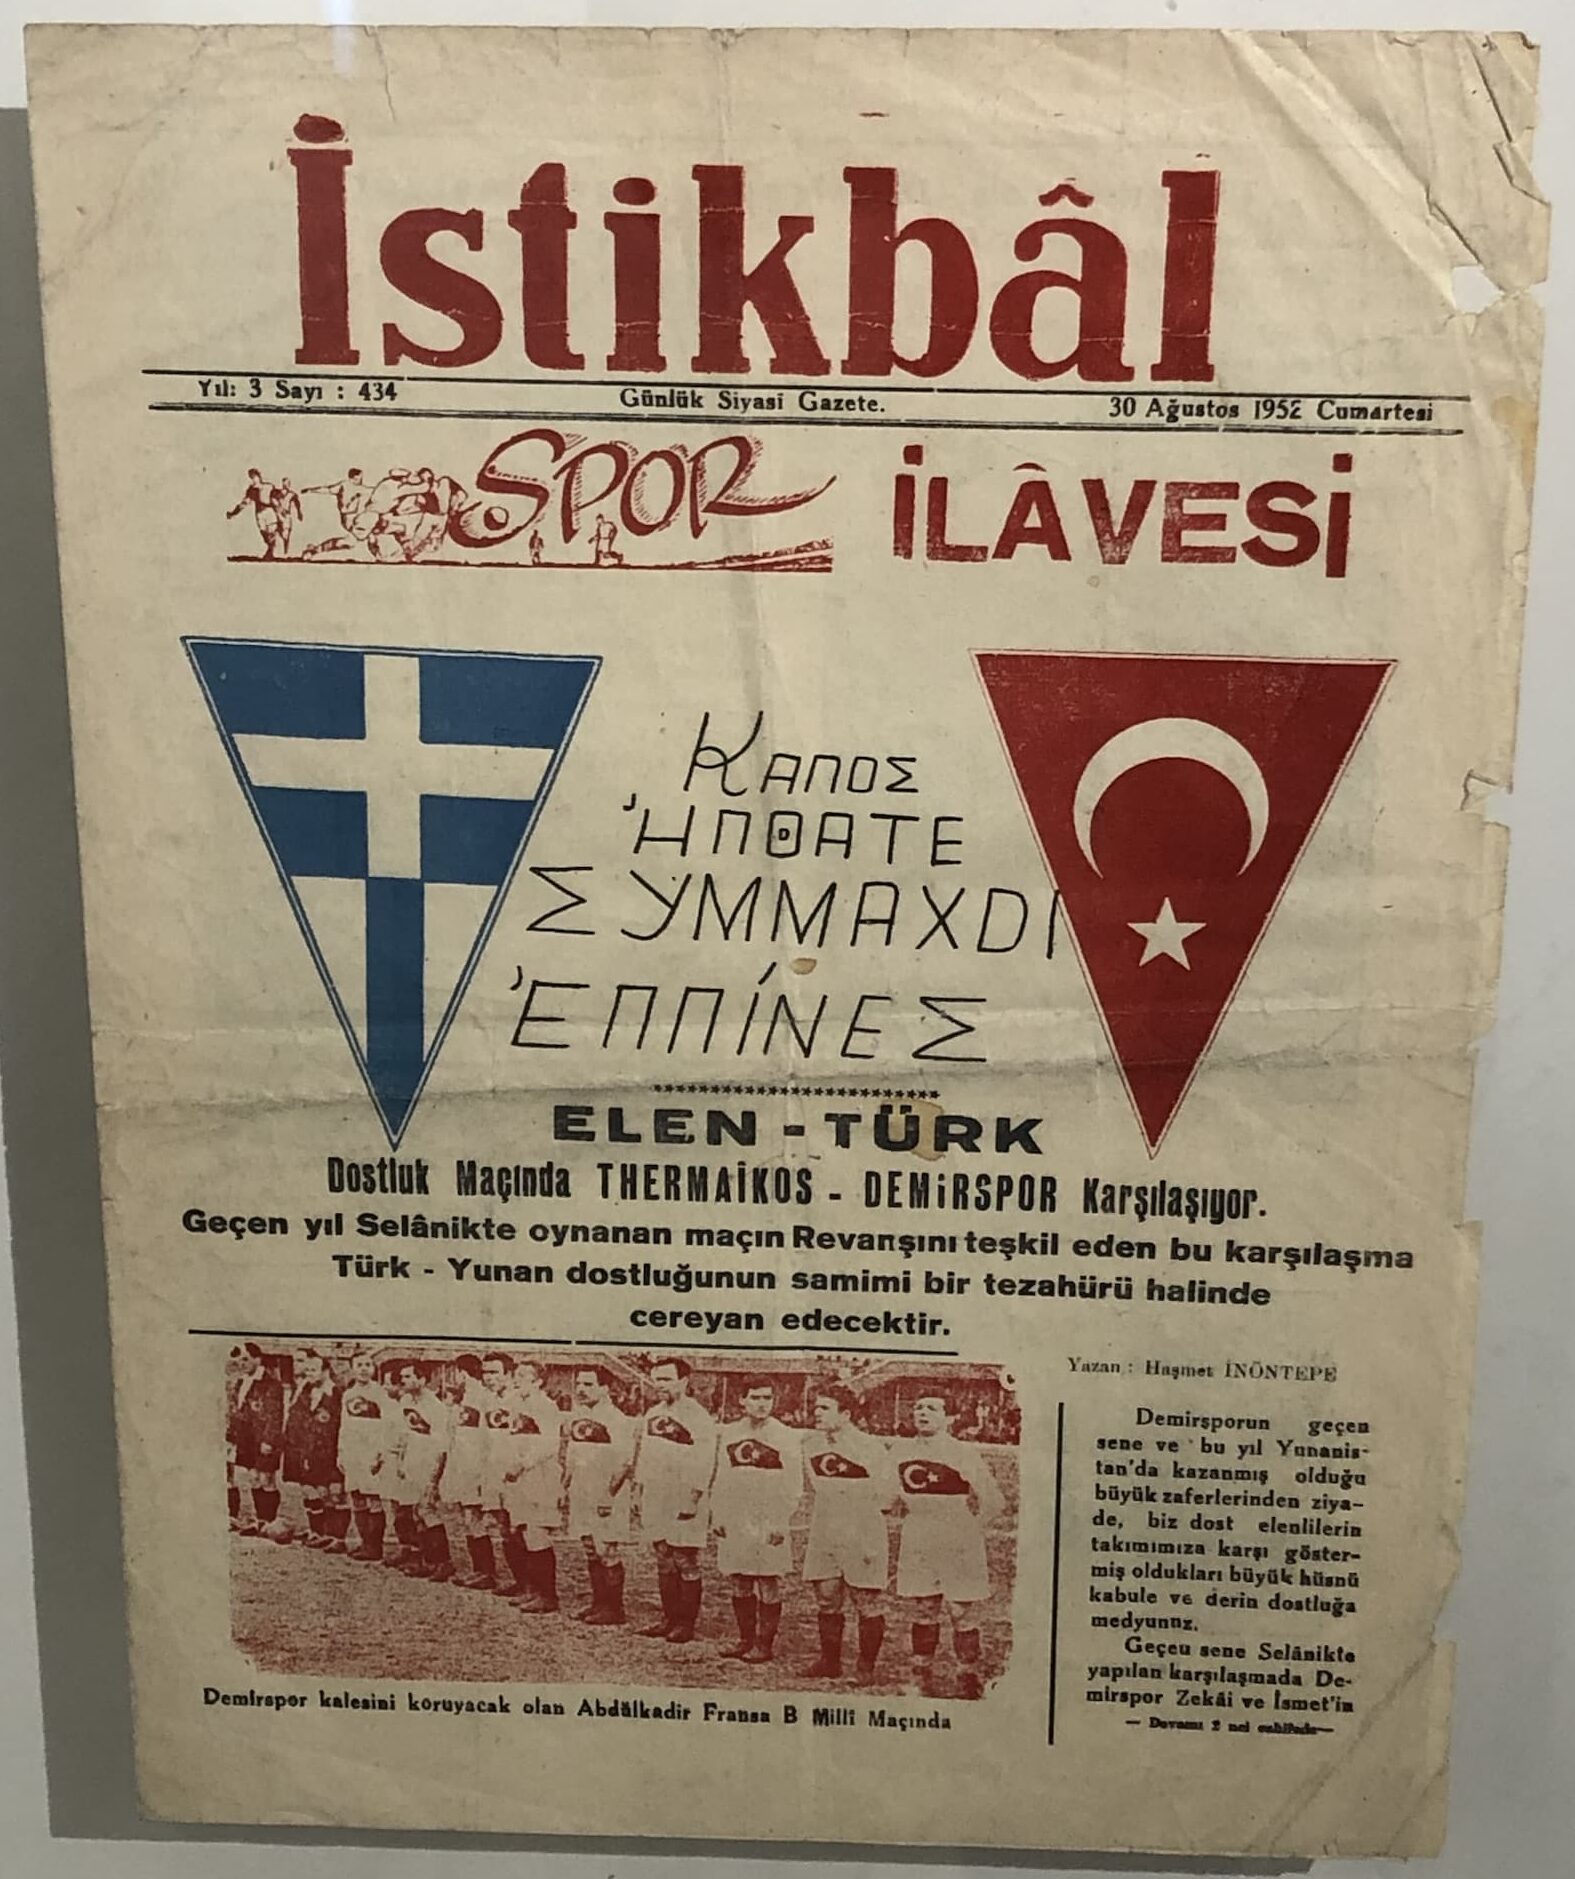 Magazine featuring a Greek-Turkish friendship football match at the Anadolu University Republic History Museum in Eskişehir, Turkey